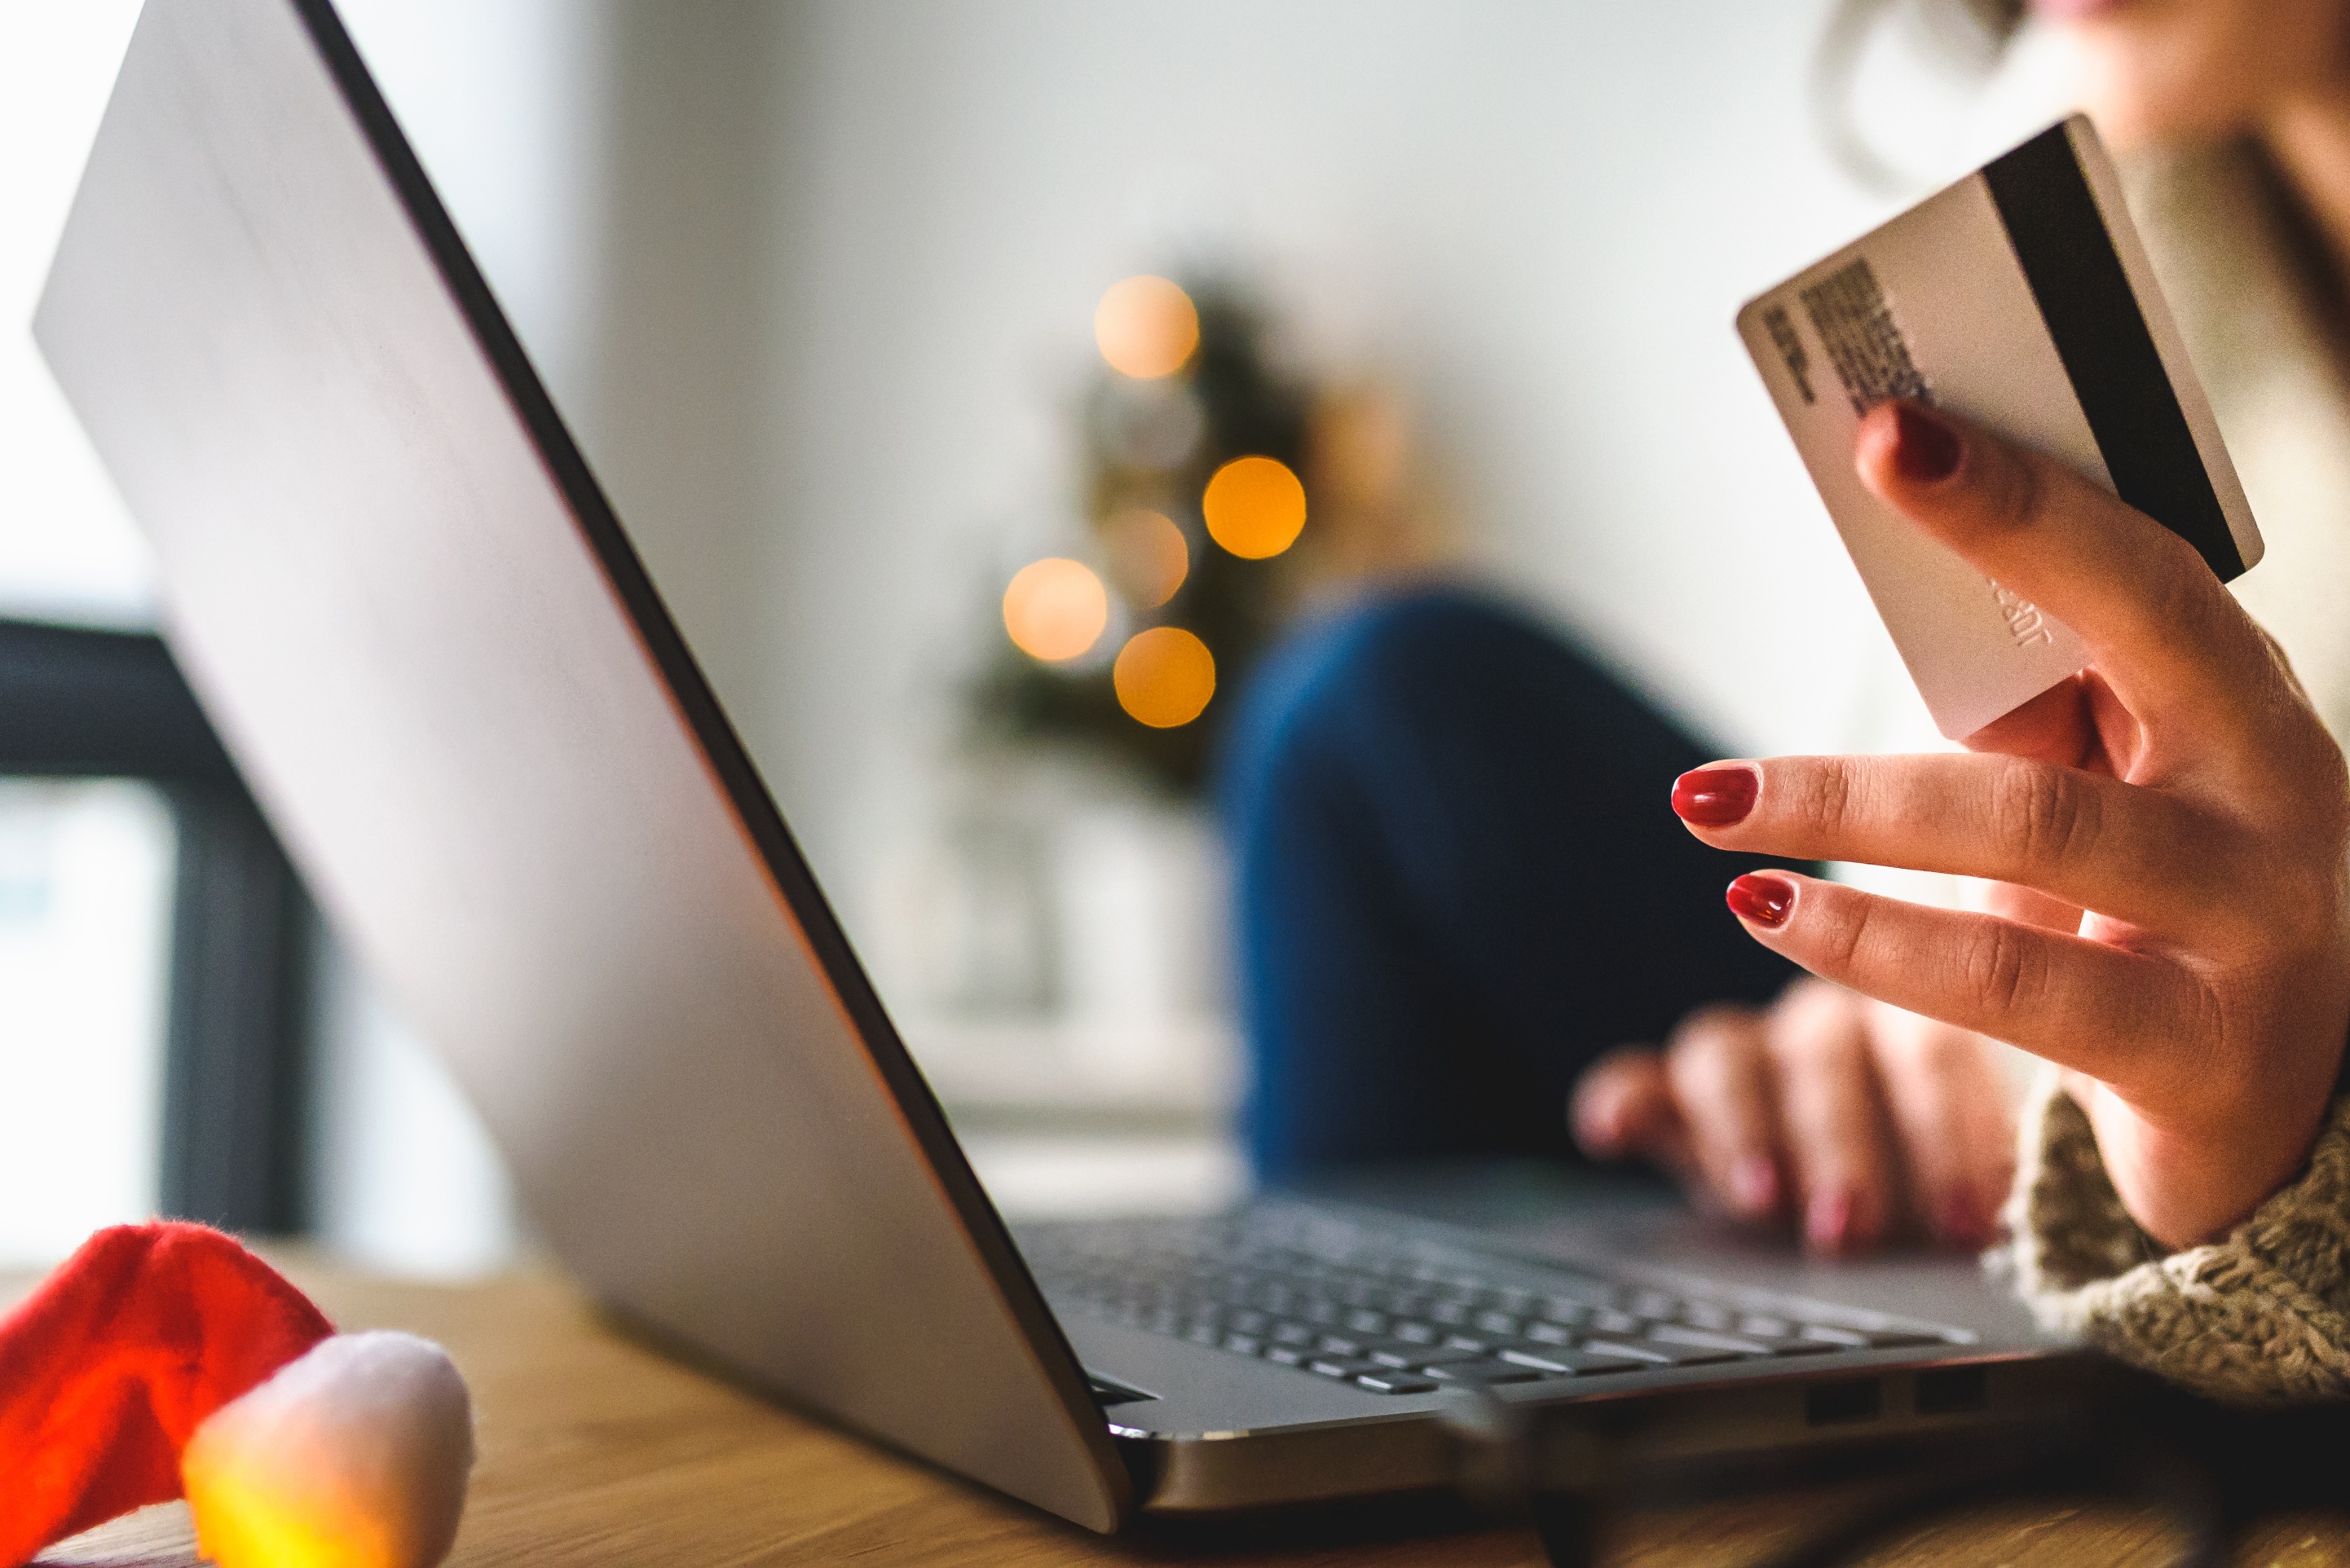 woman online shopping e-commerce during festive holiday season